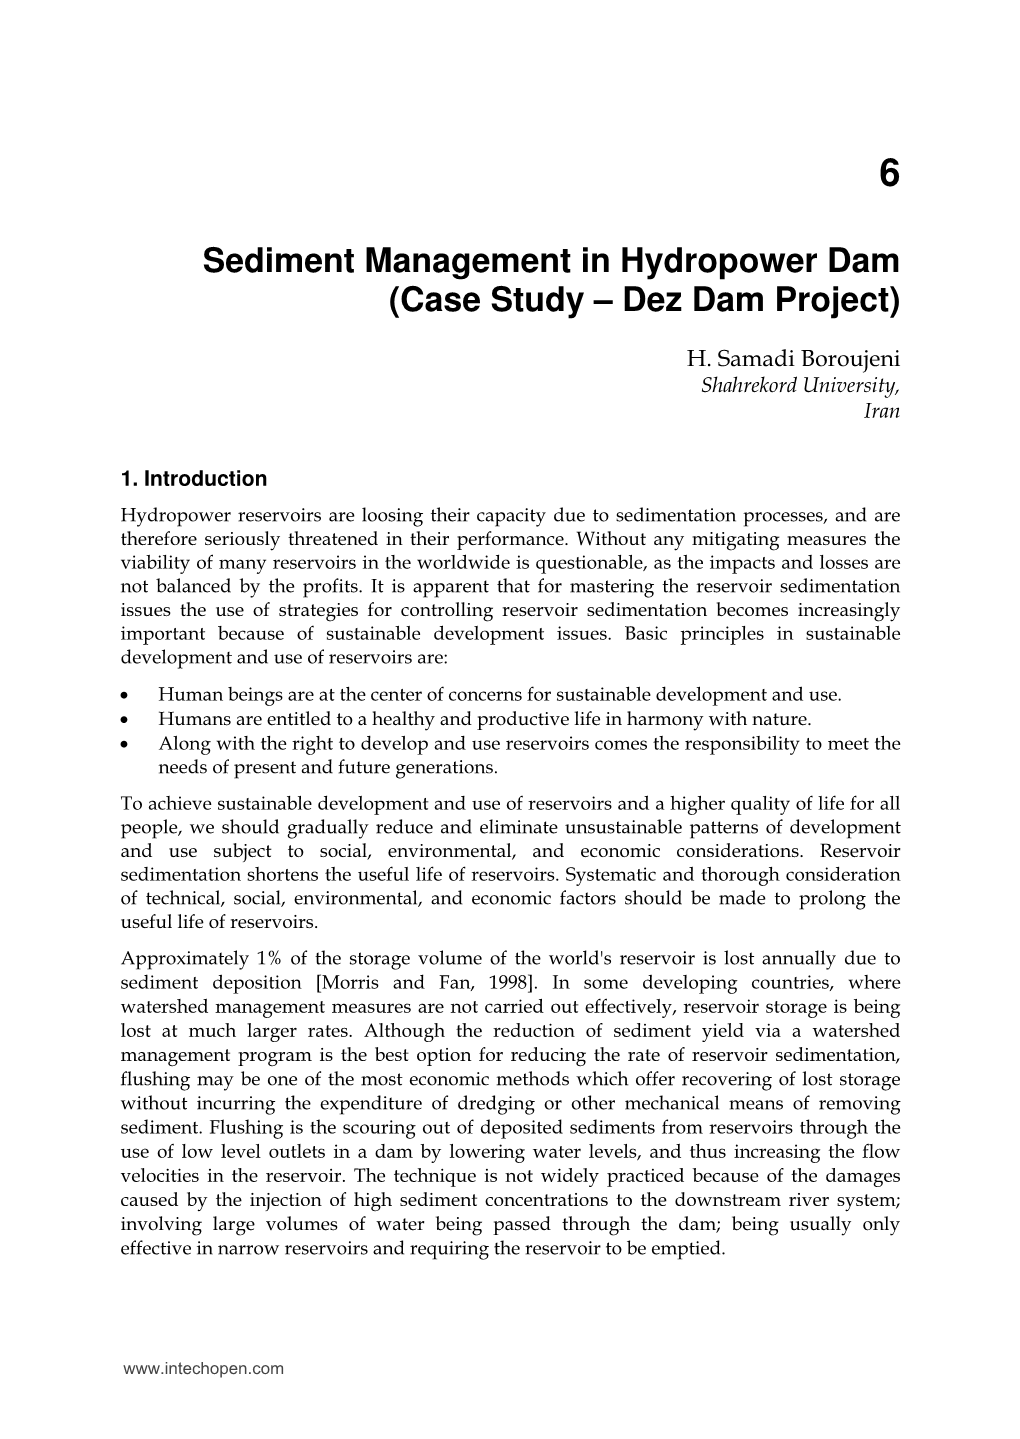 Sediment Management in Hydropower Dam (Case Study – Dez Dam Project)